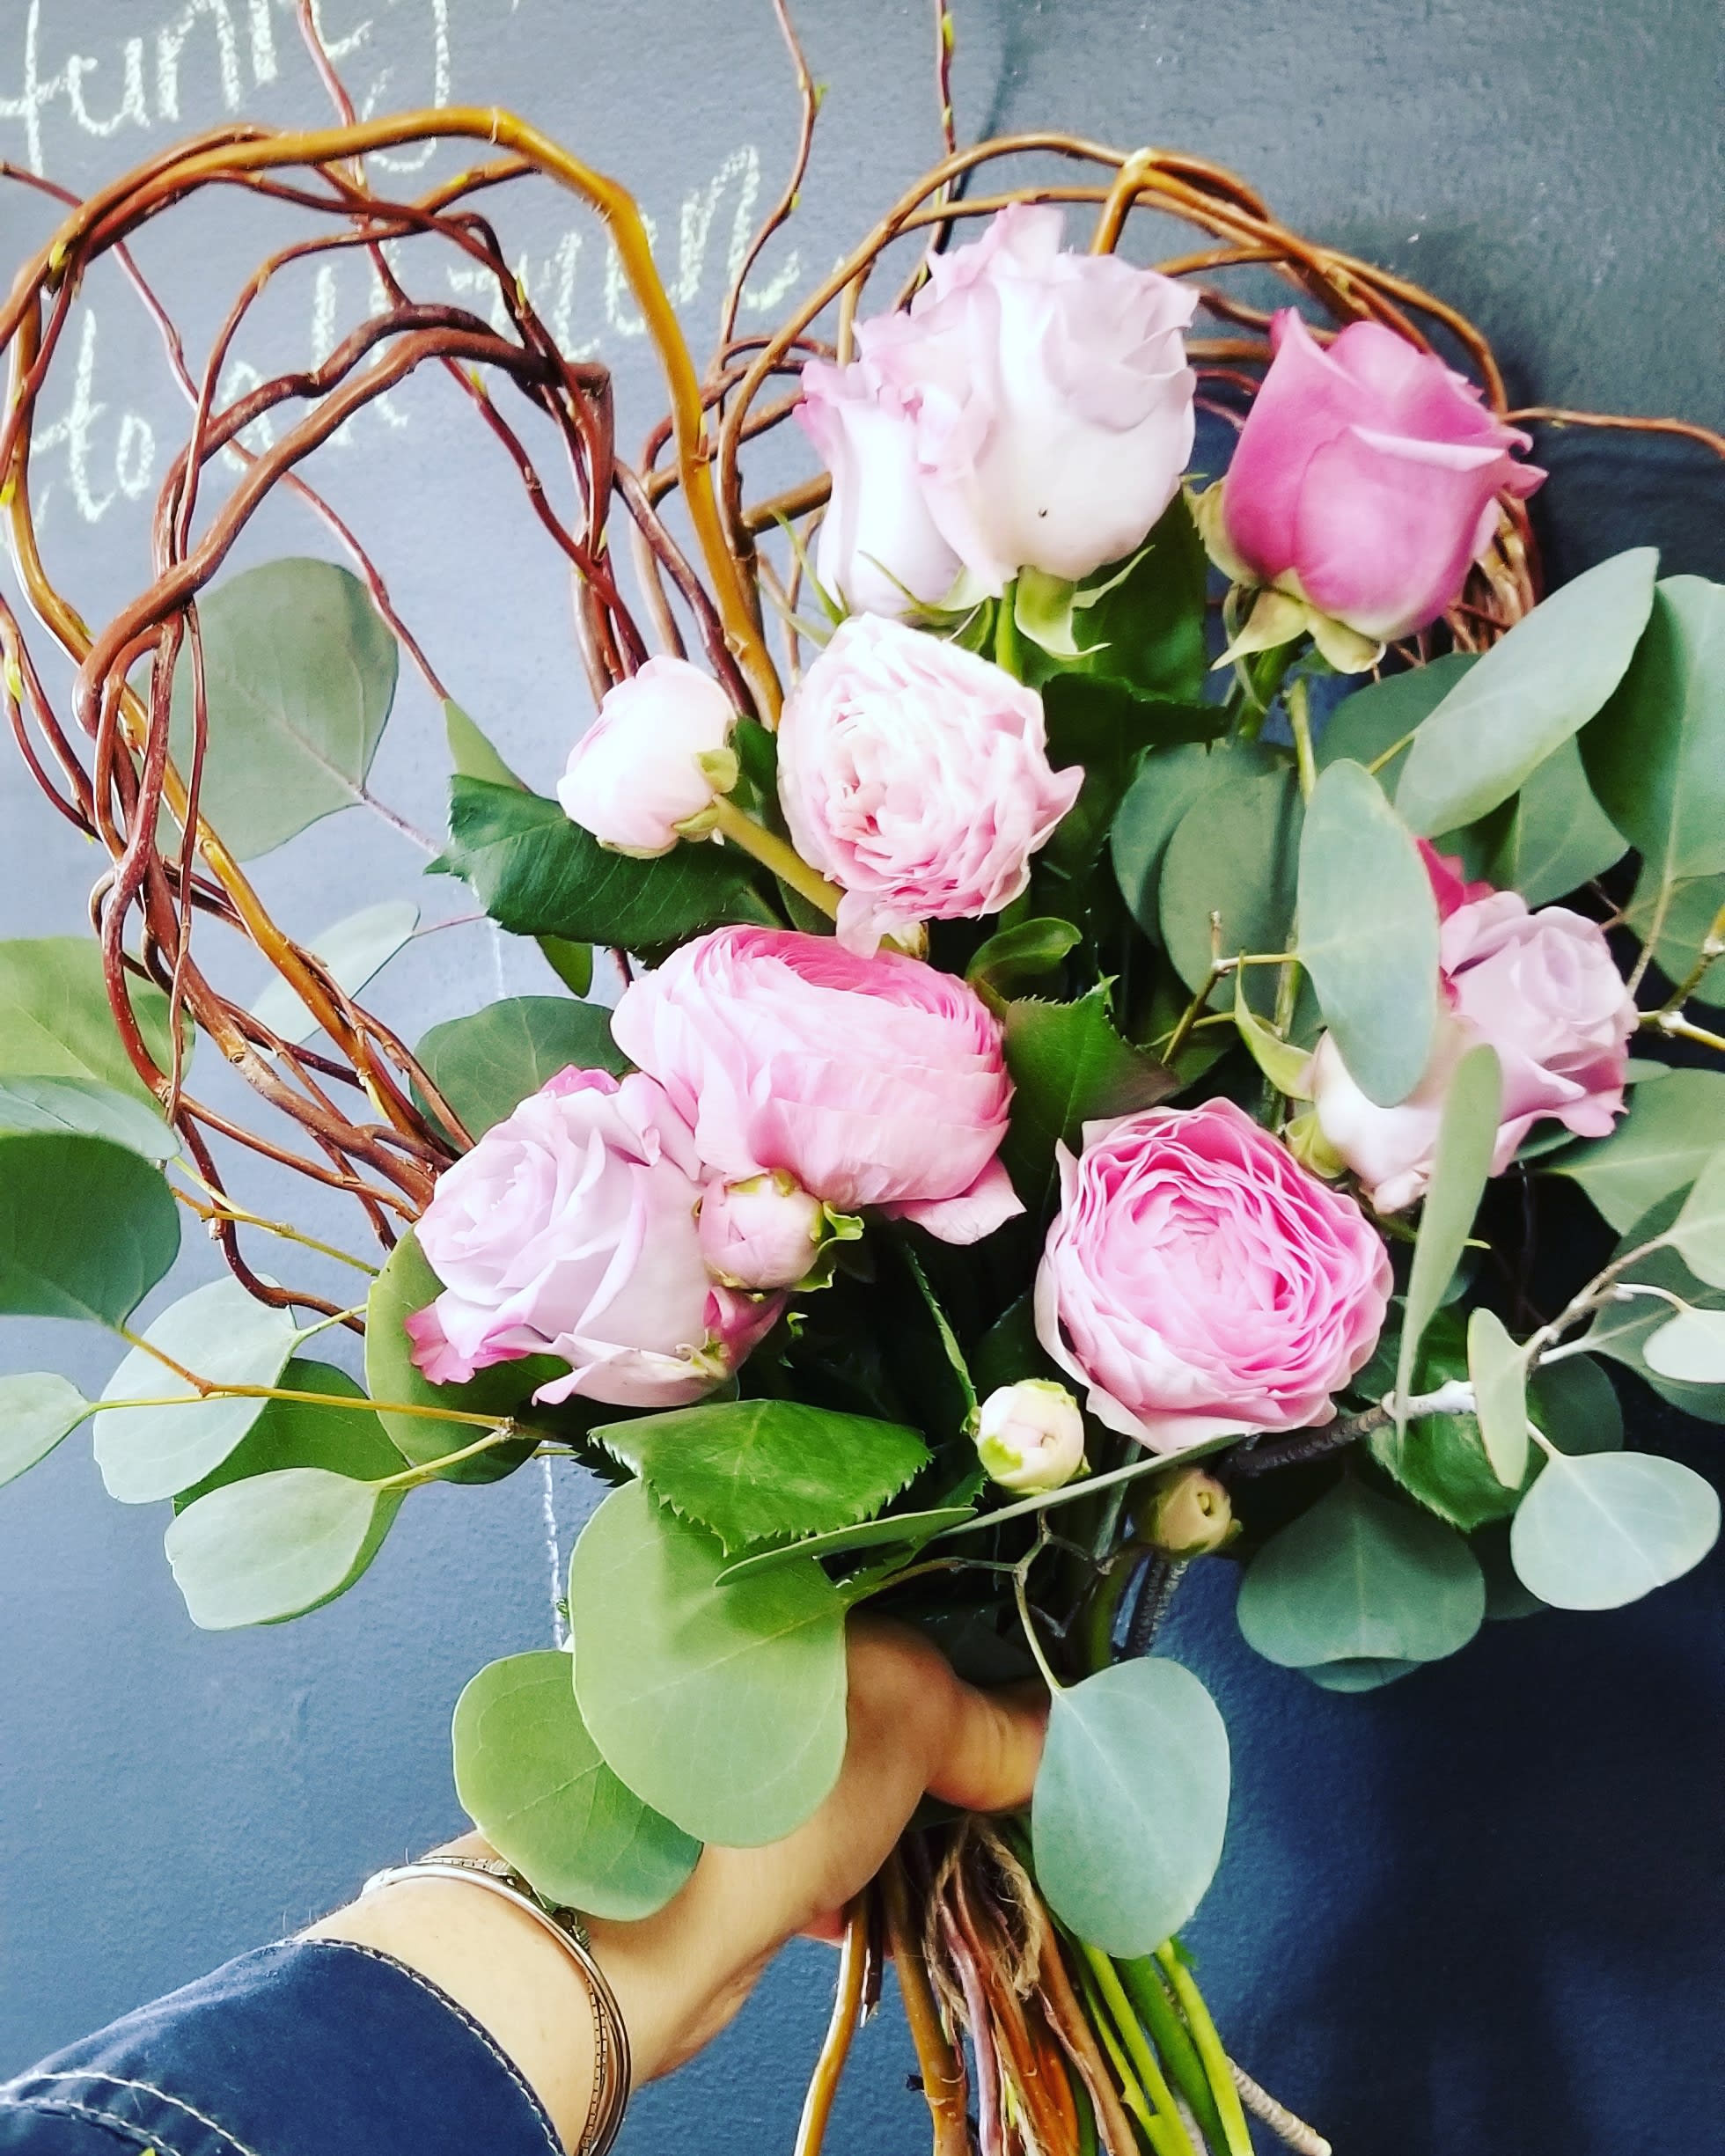 Romantic Hand-Tied Bouquet